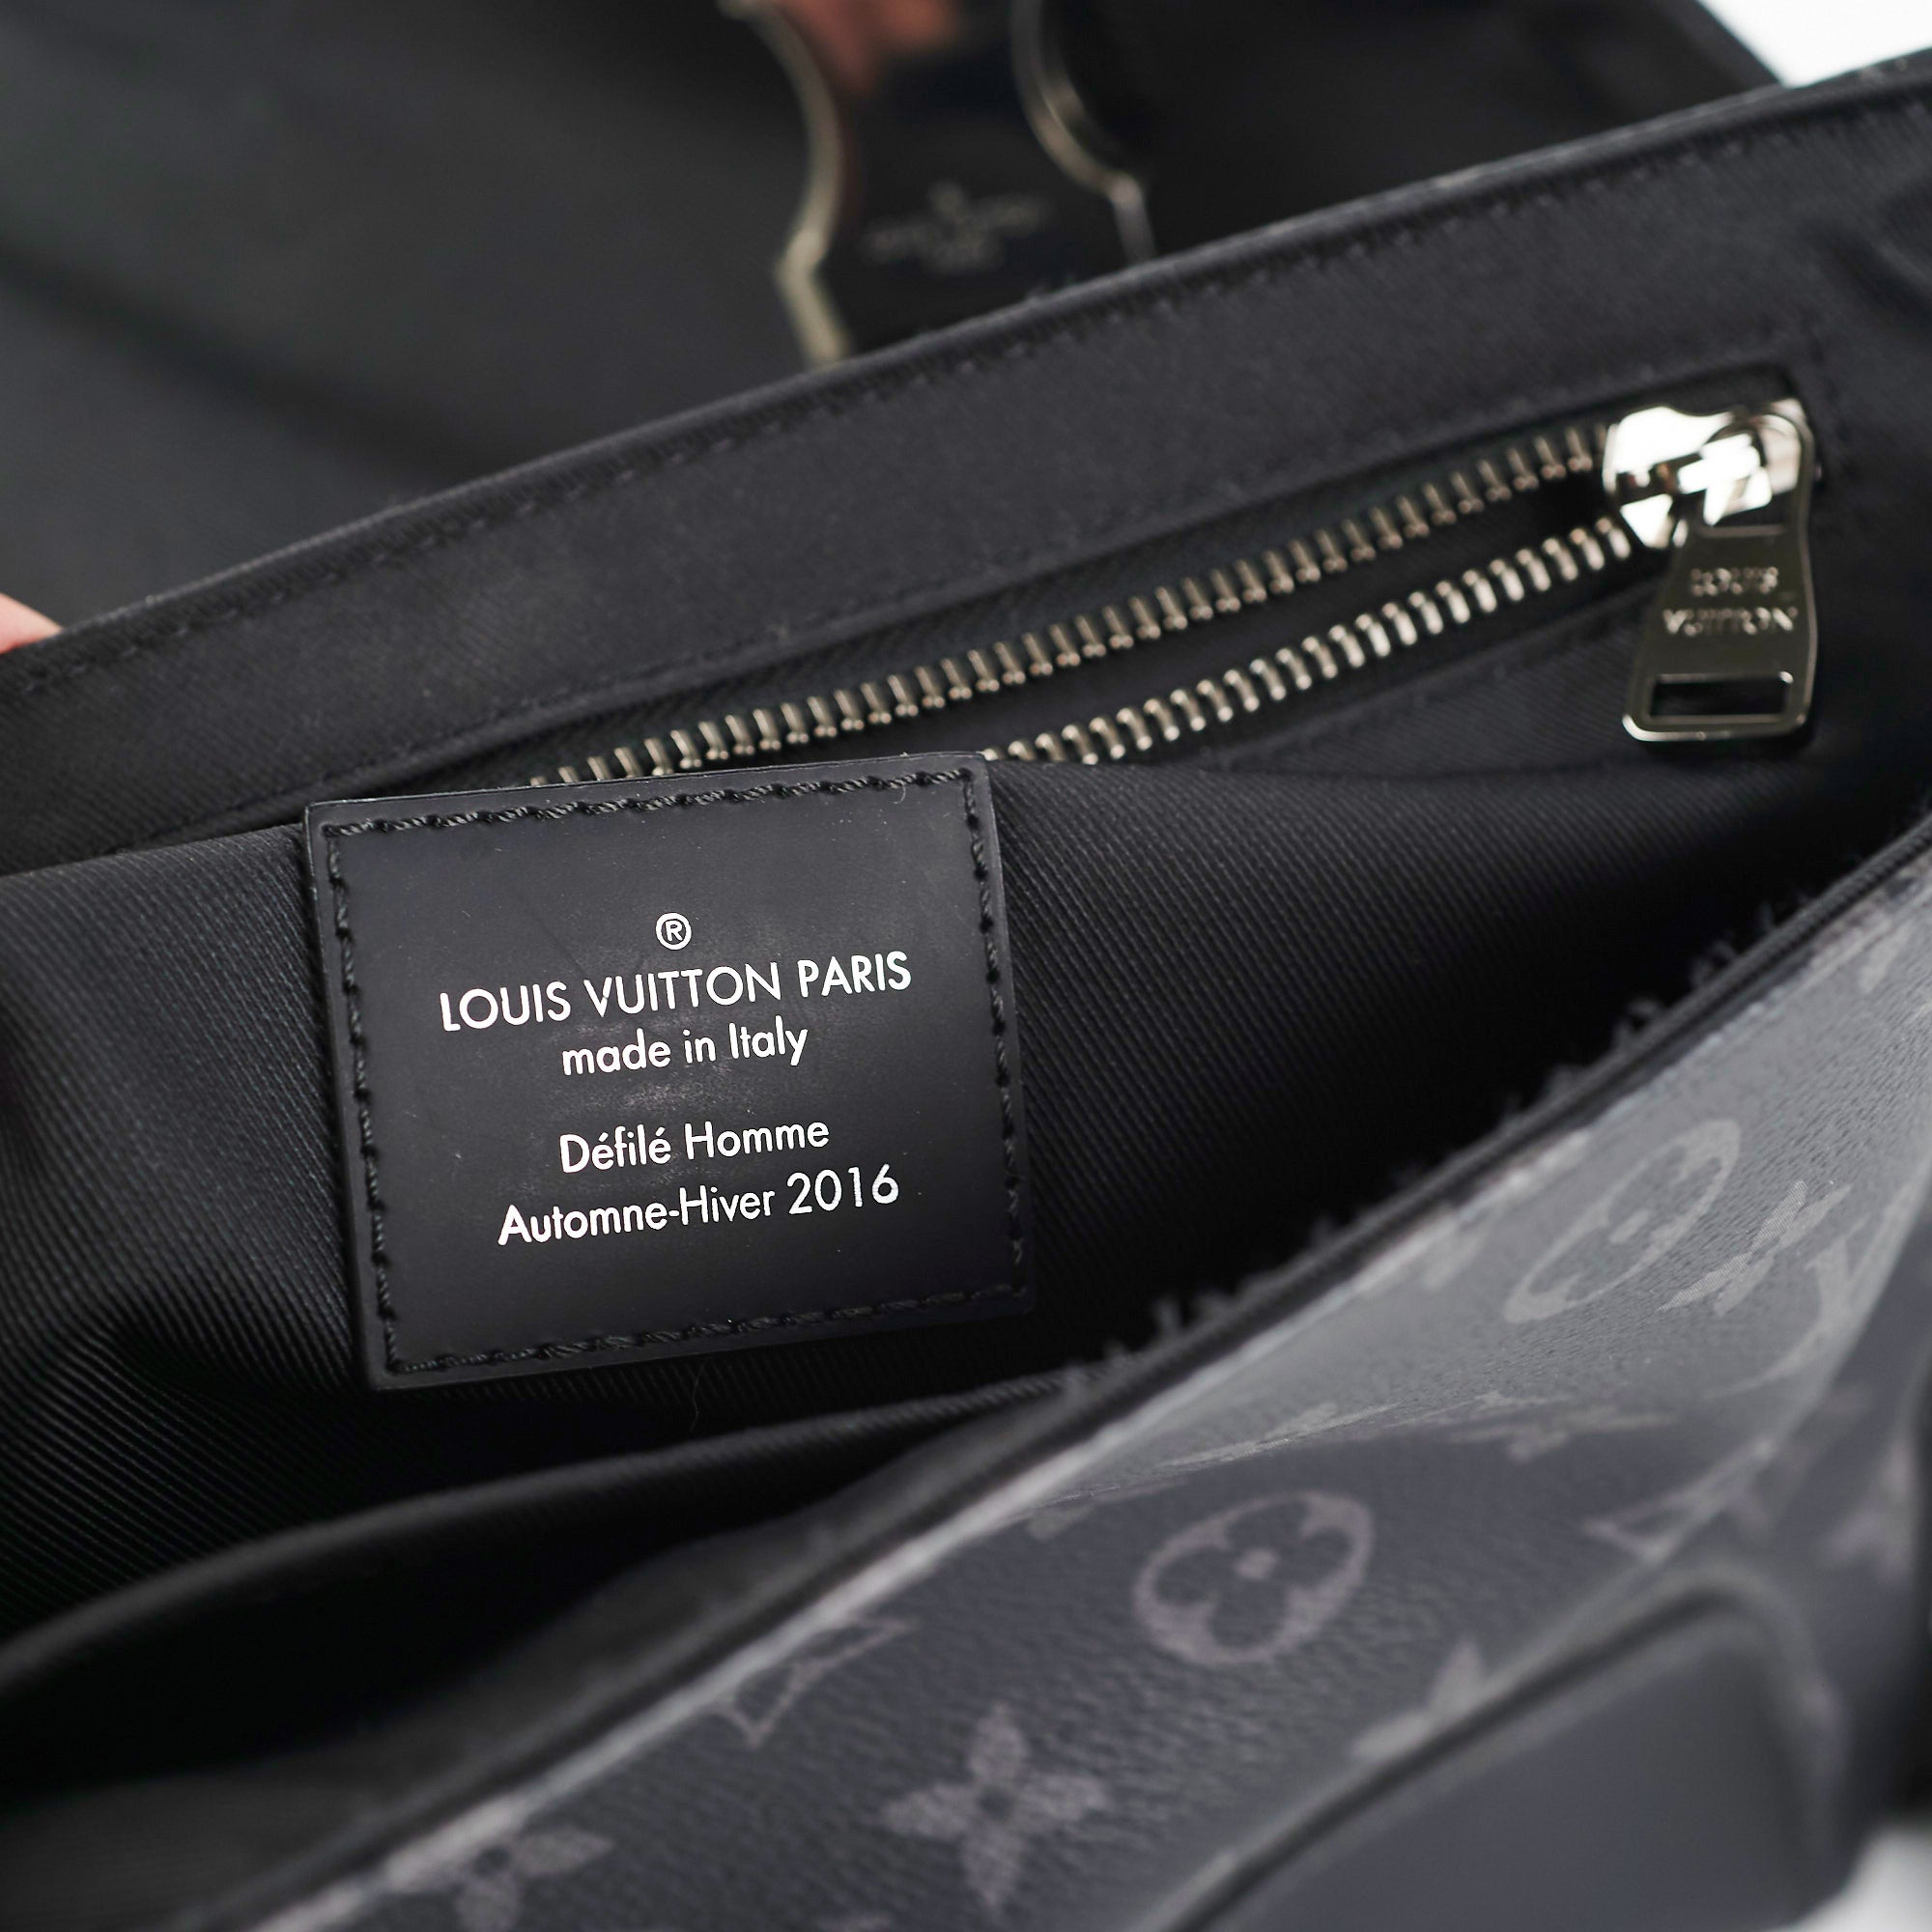 Louis Vuitton Messenger PM Voyager 2020 - DesignerSupplier